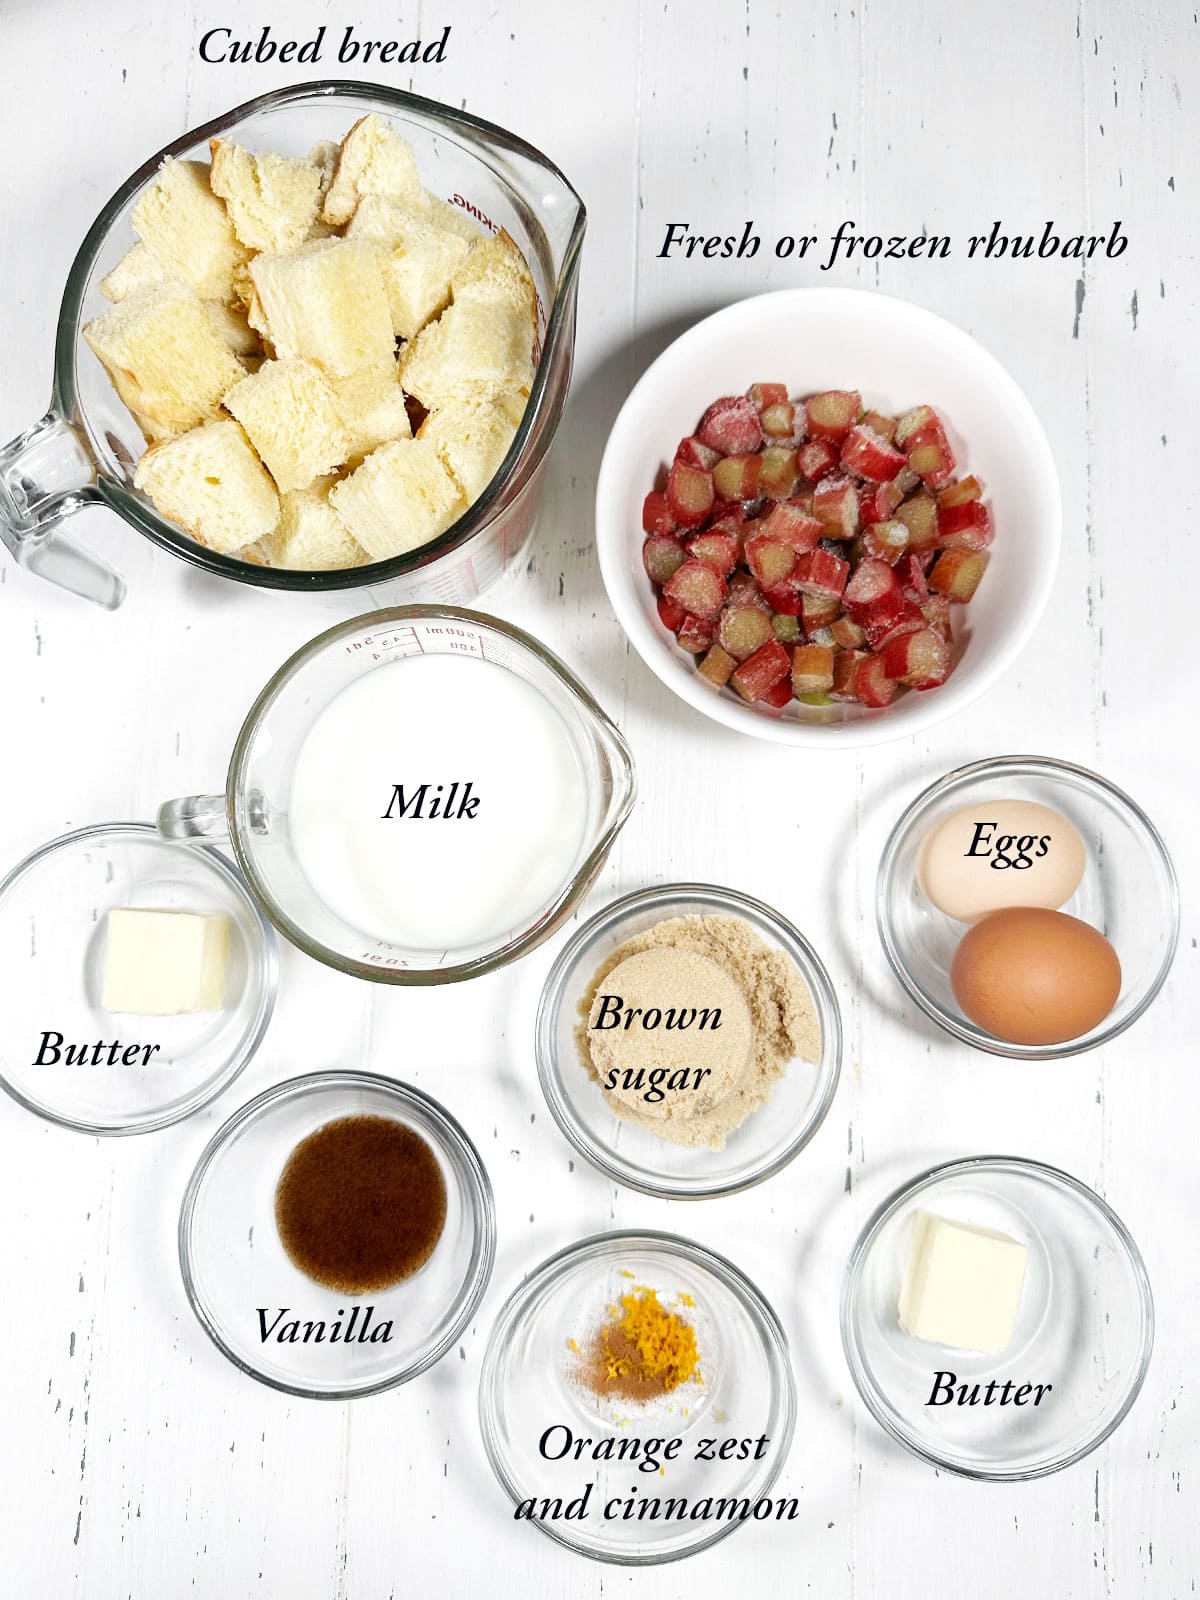 Ingredients to make rhubarb bread pudding.